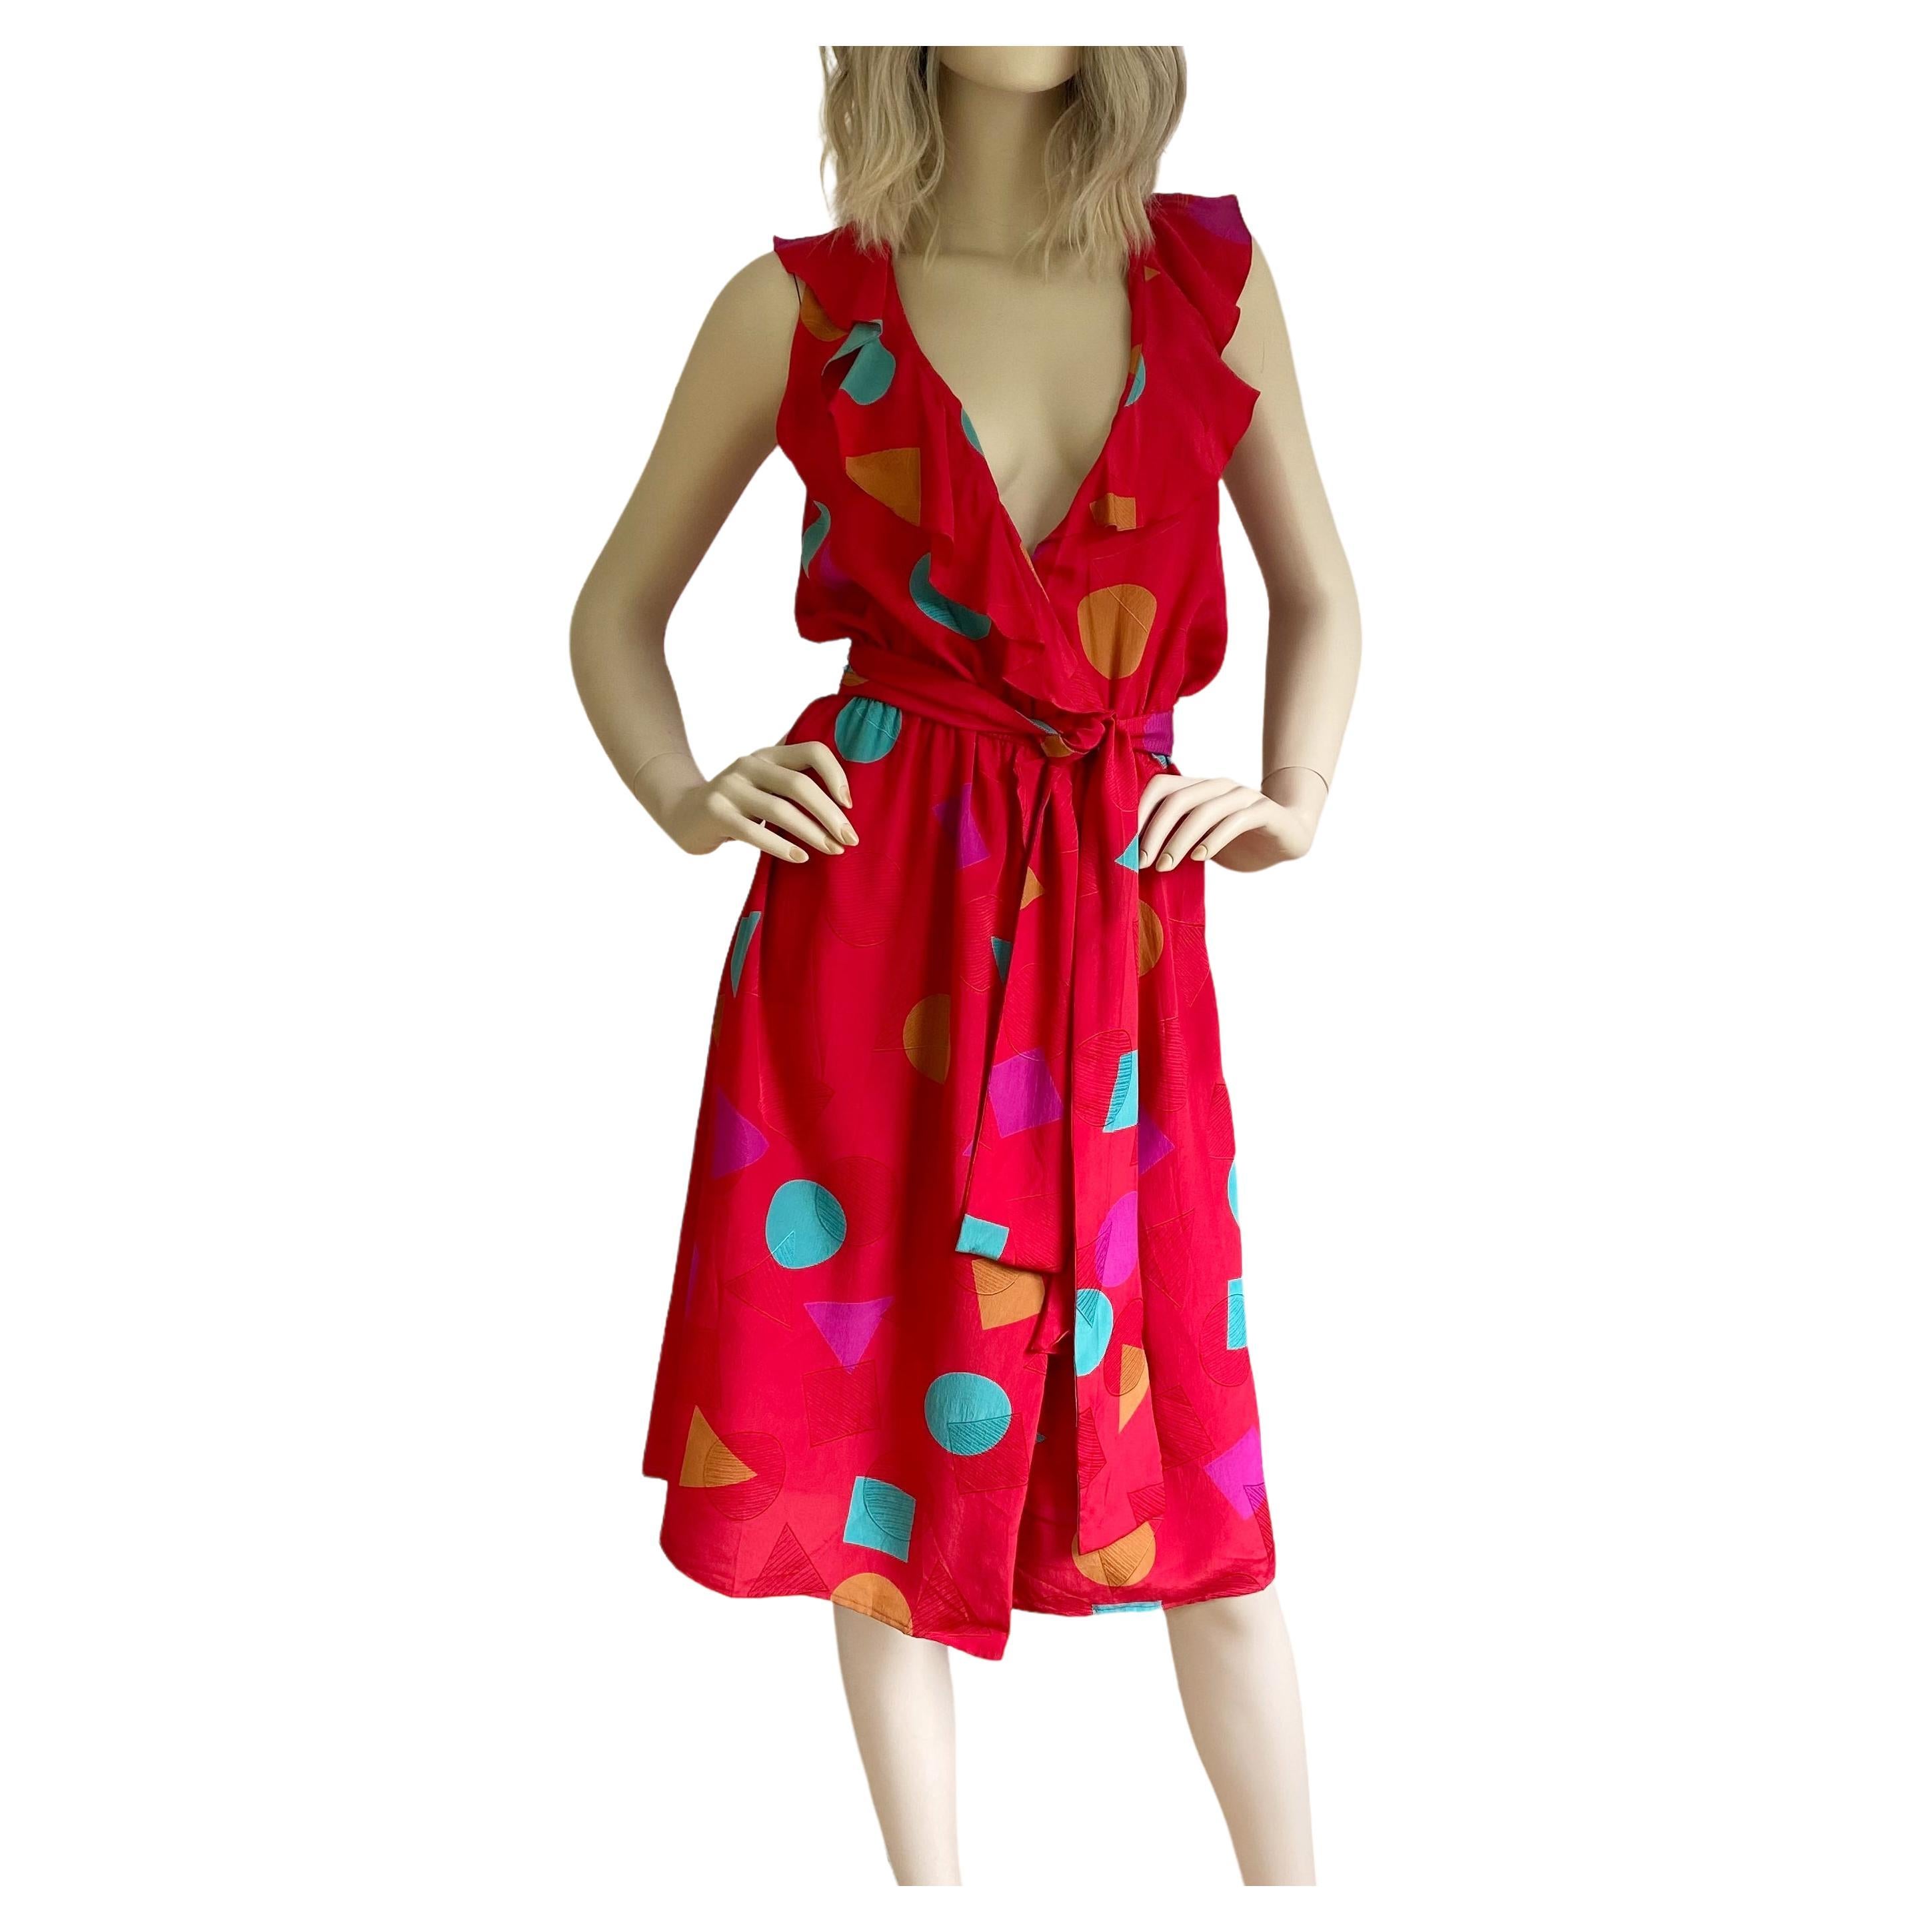 Flowy flirty red silk wrap (mock wrap) dress.
Bias-cut ruffles.
Elastic waist. With detachable self belt.
Flora's geo print on geo silk jacquard. 
Size 8
25